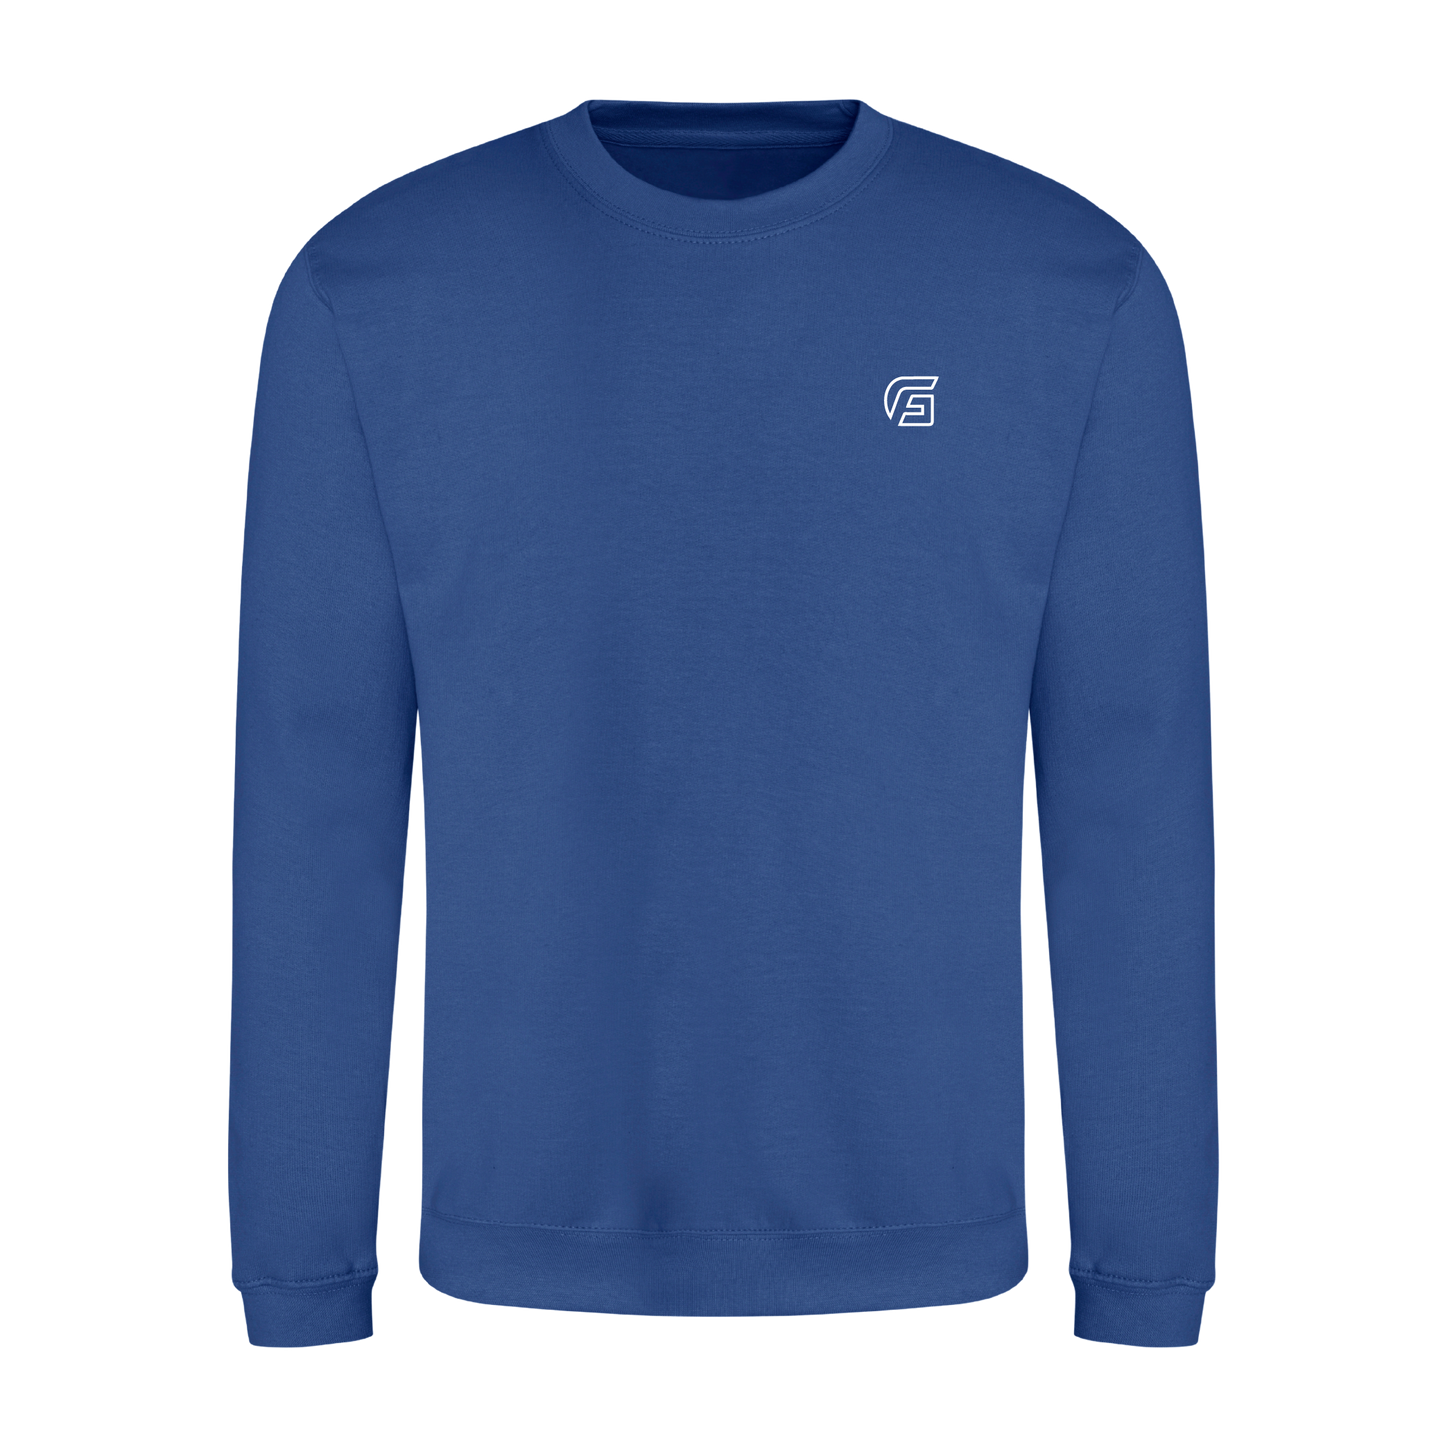 Focusgolf Swing Strong Men's Royal Blue Sweatshirt